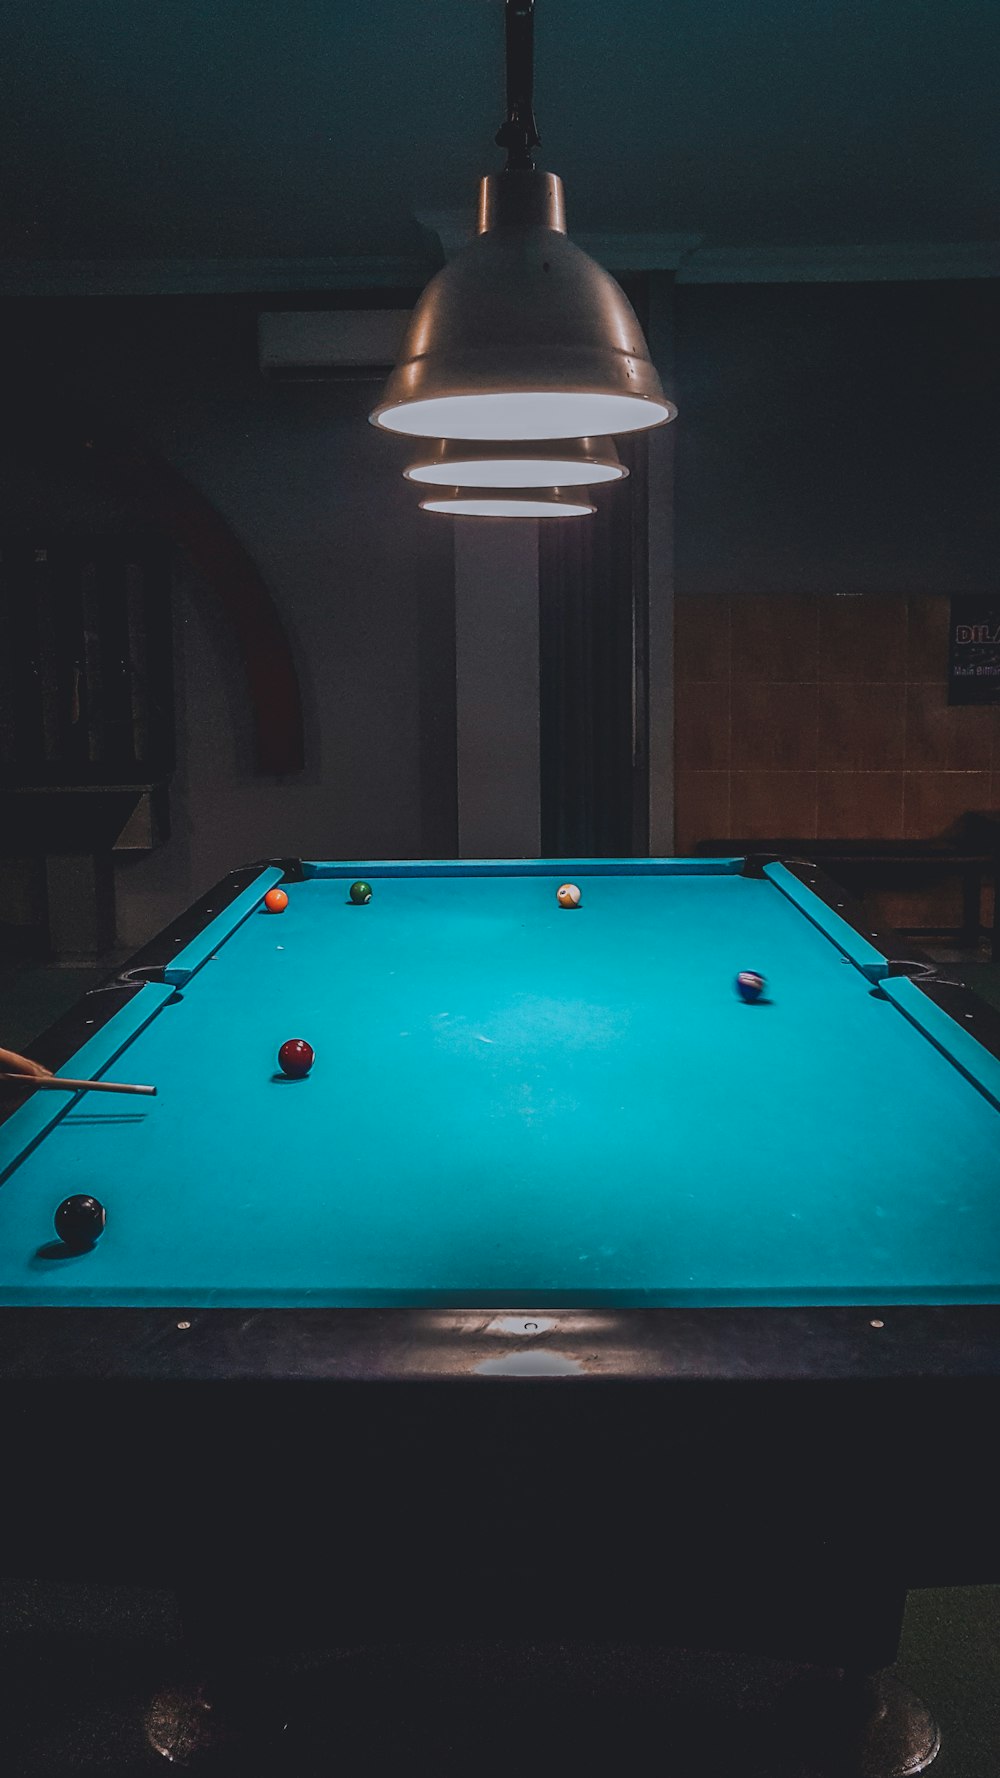 shallow focus photo of blue billiard table